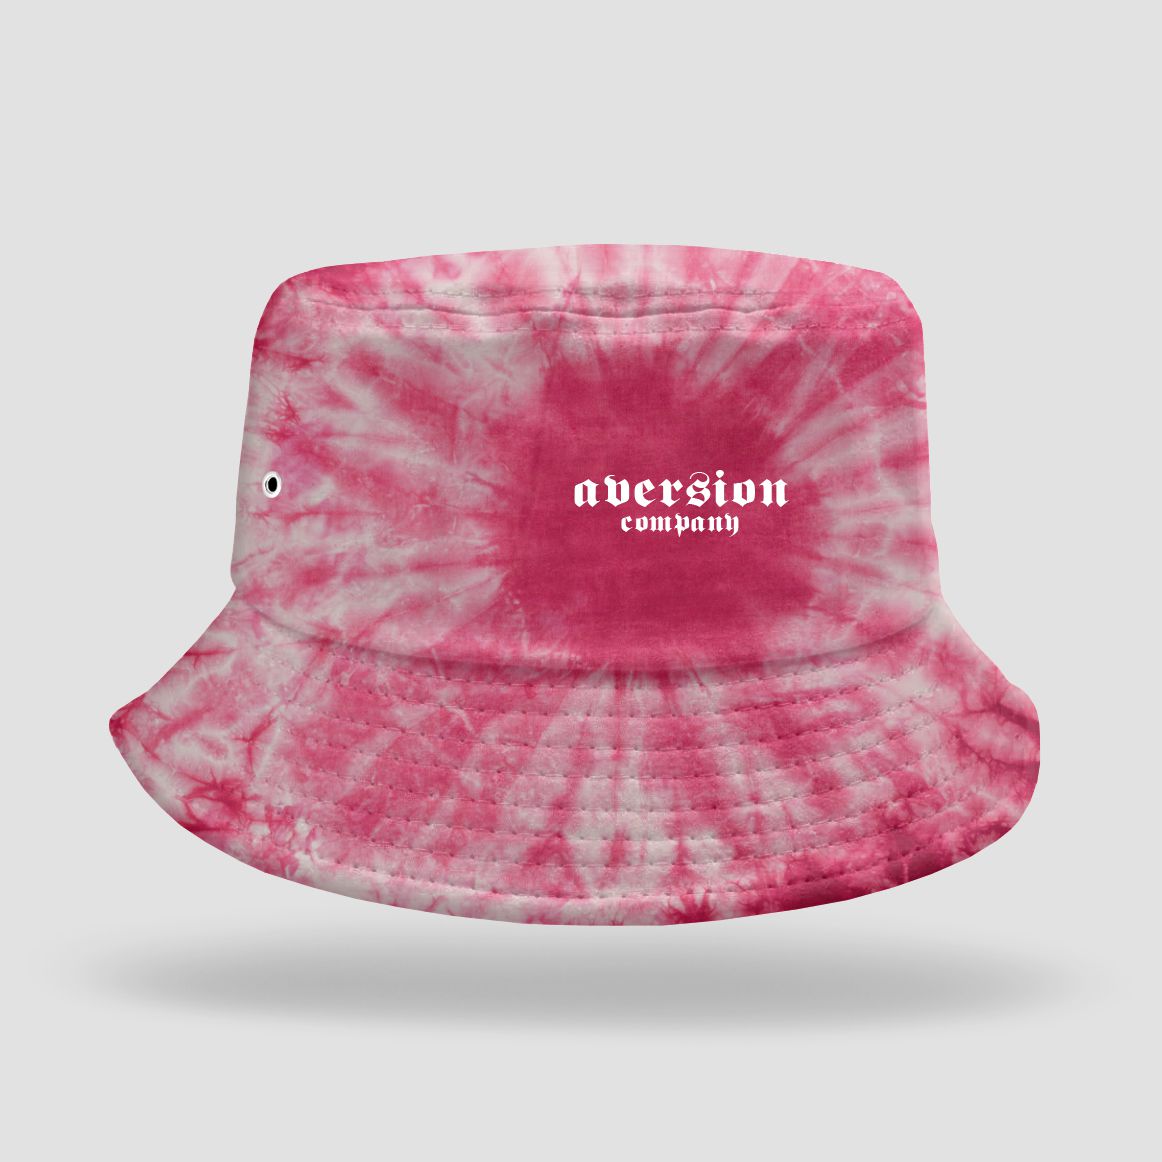 Chapéu Bucket Hat Aversion Tie Dye Vermelho - Aversion Outfits Co. |  Camisetas, Bonés, Blusas, Bags, Gorros, Bermudas, Bucket Hats e Acessórios